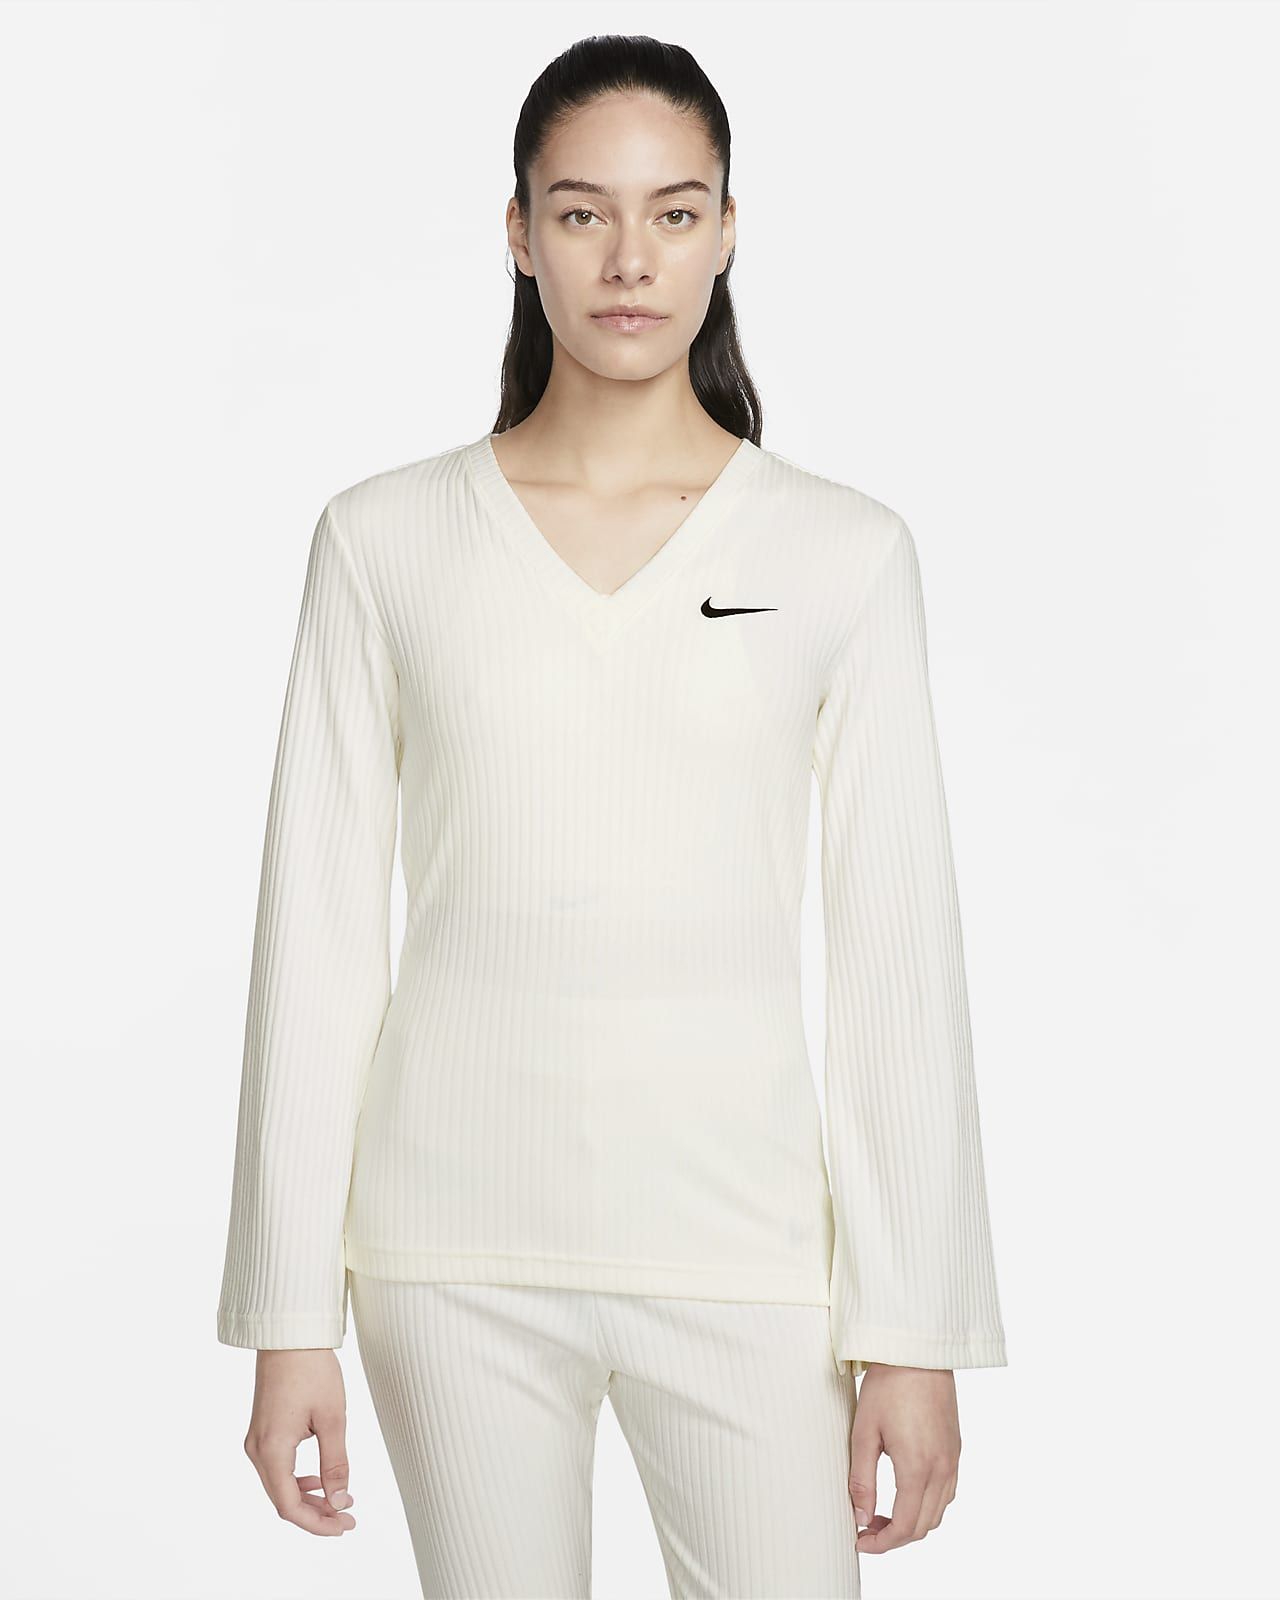 Nike Sportswear Women's Ribbed Jersey Long-Sleeve V-Neck Top. Nike.com | Nike (US)